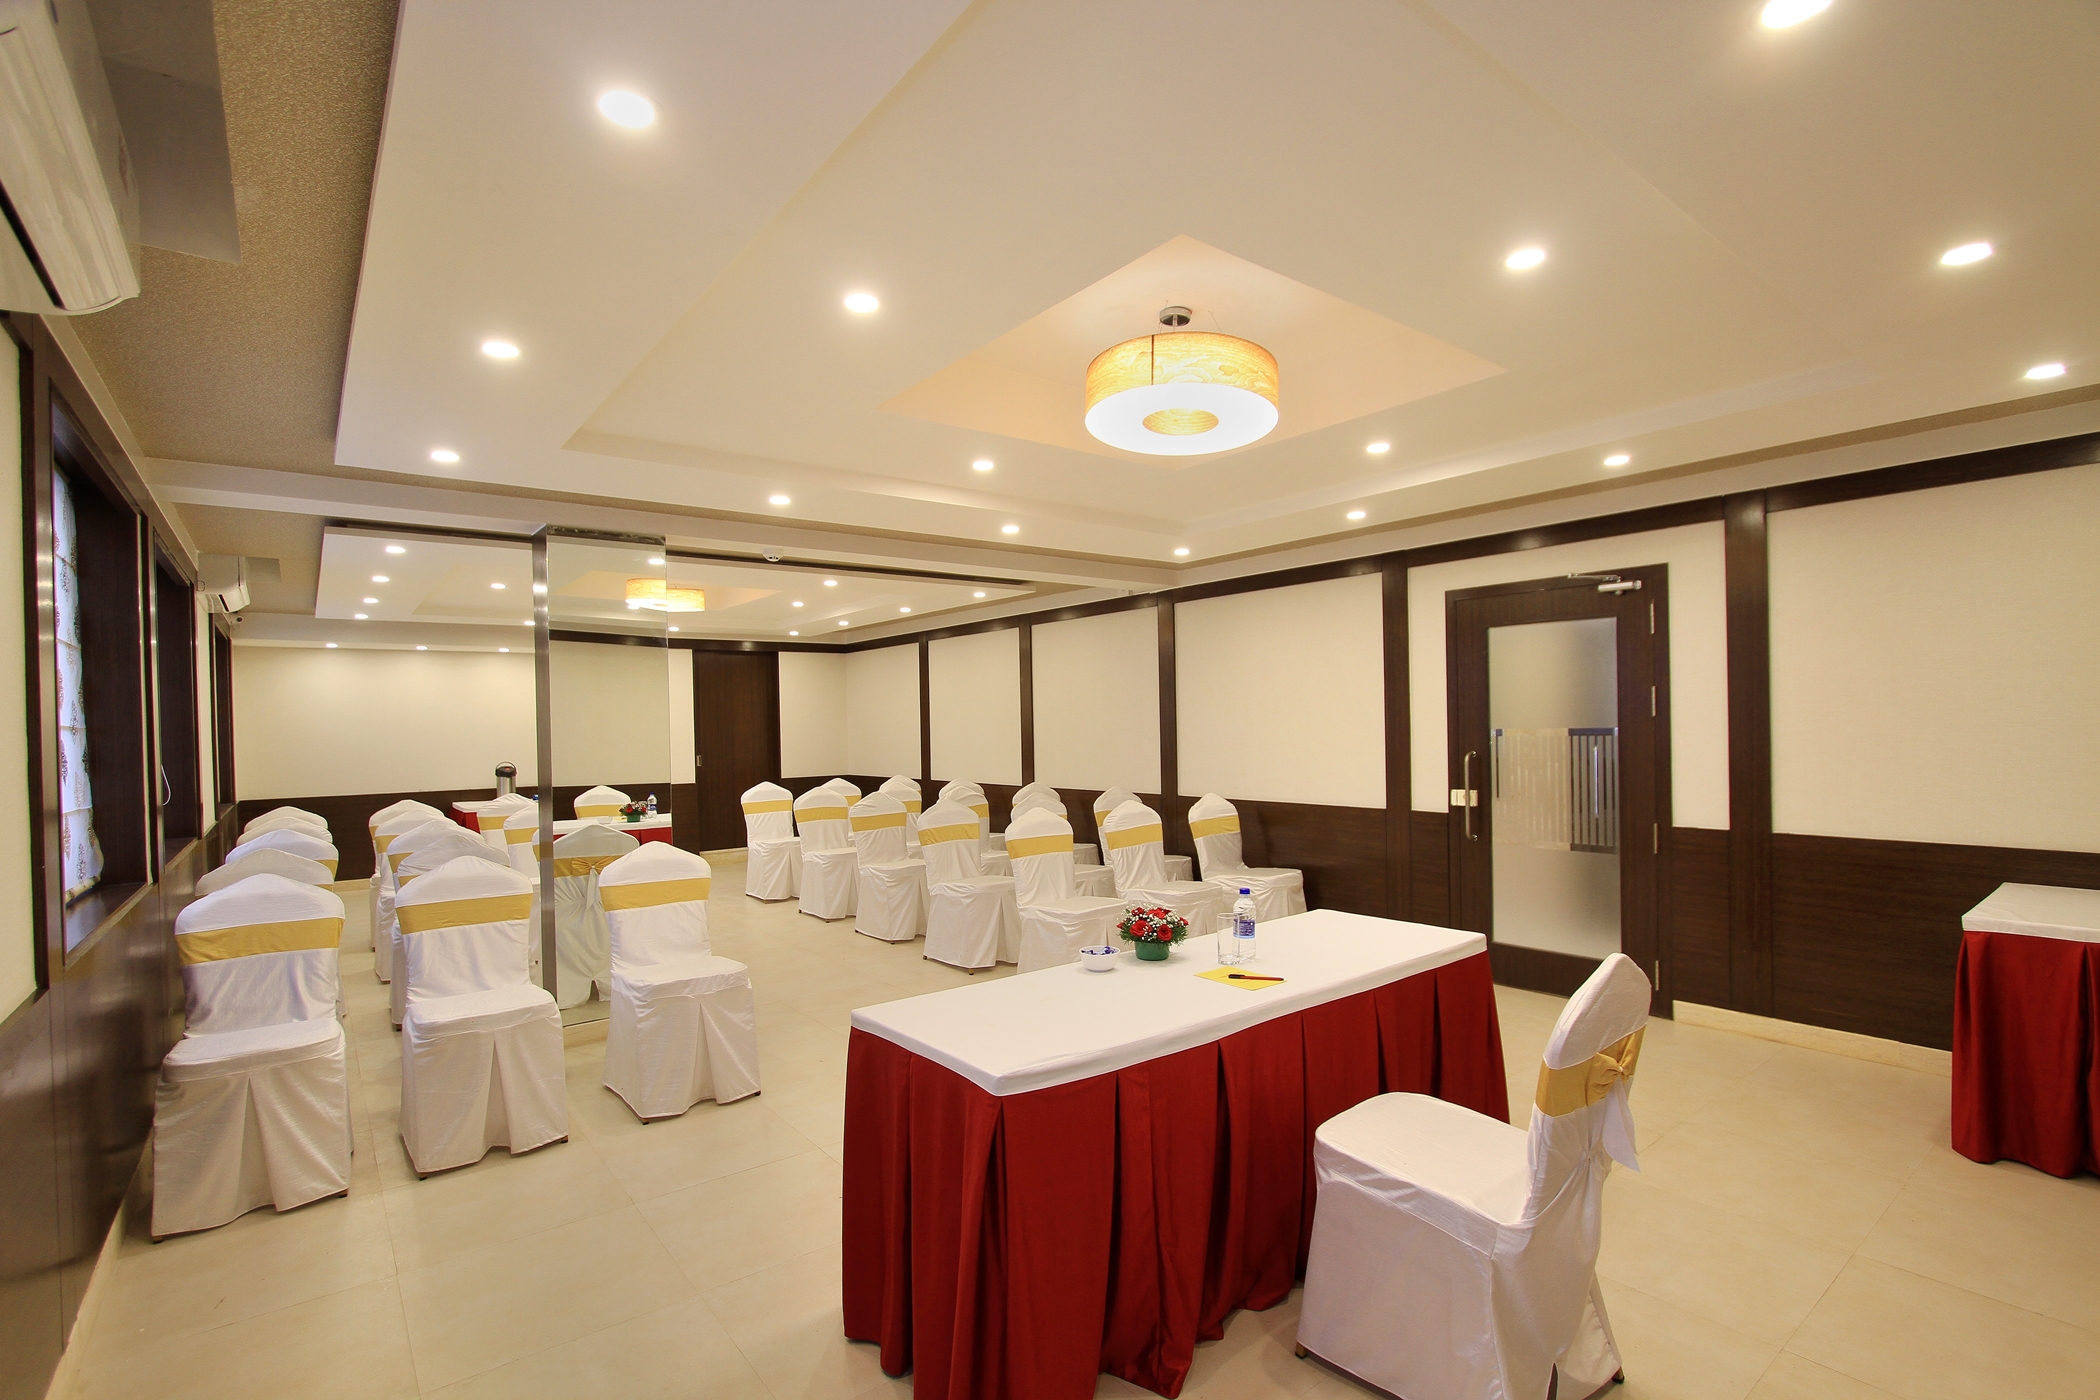 SENATE HALL,  banquet halls in bangalore, La Sara Regent Hotel, Koramangala